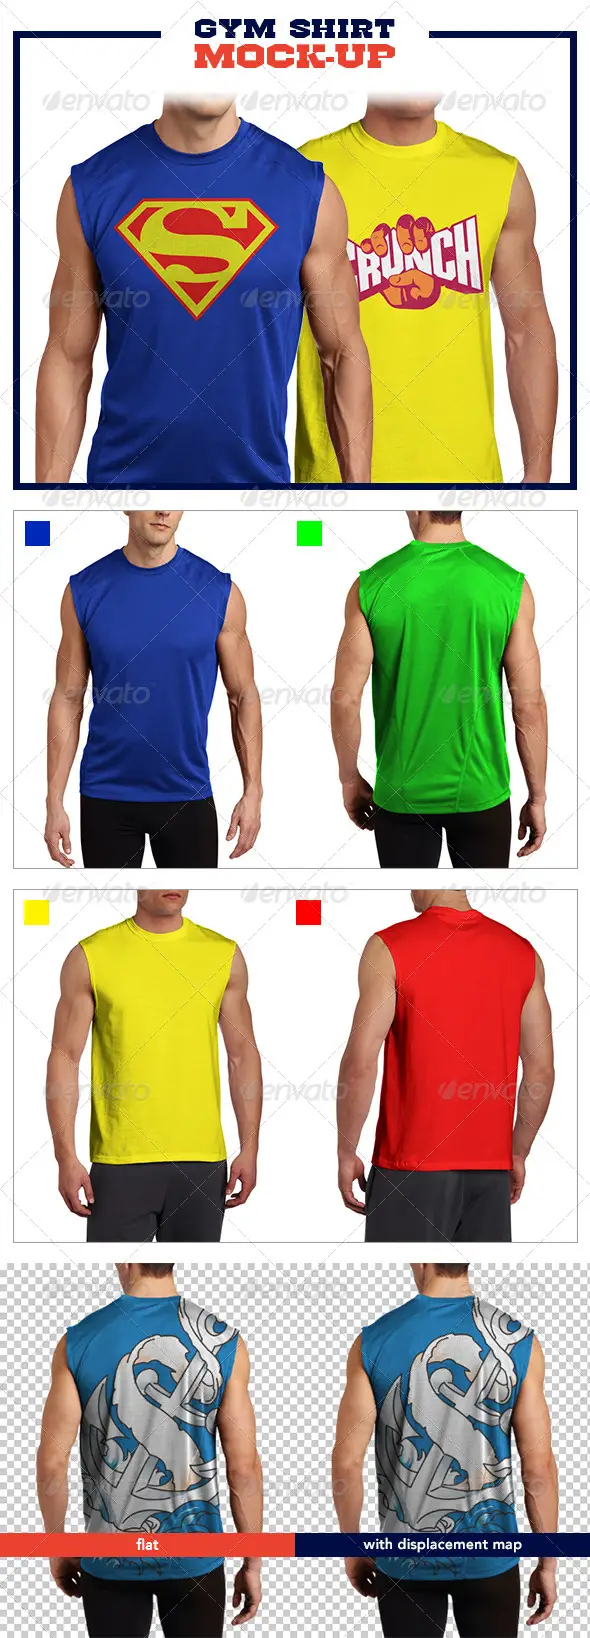 Gym Shirt Mockup Pack